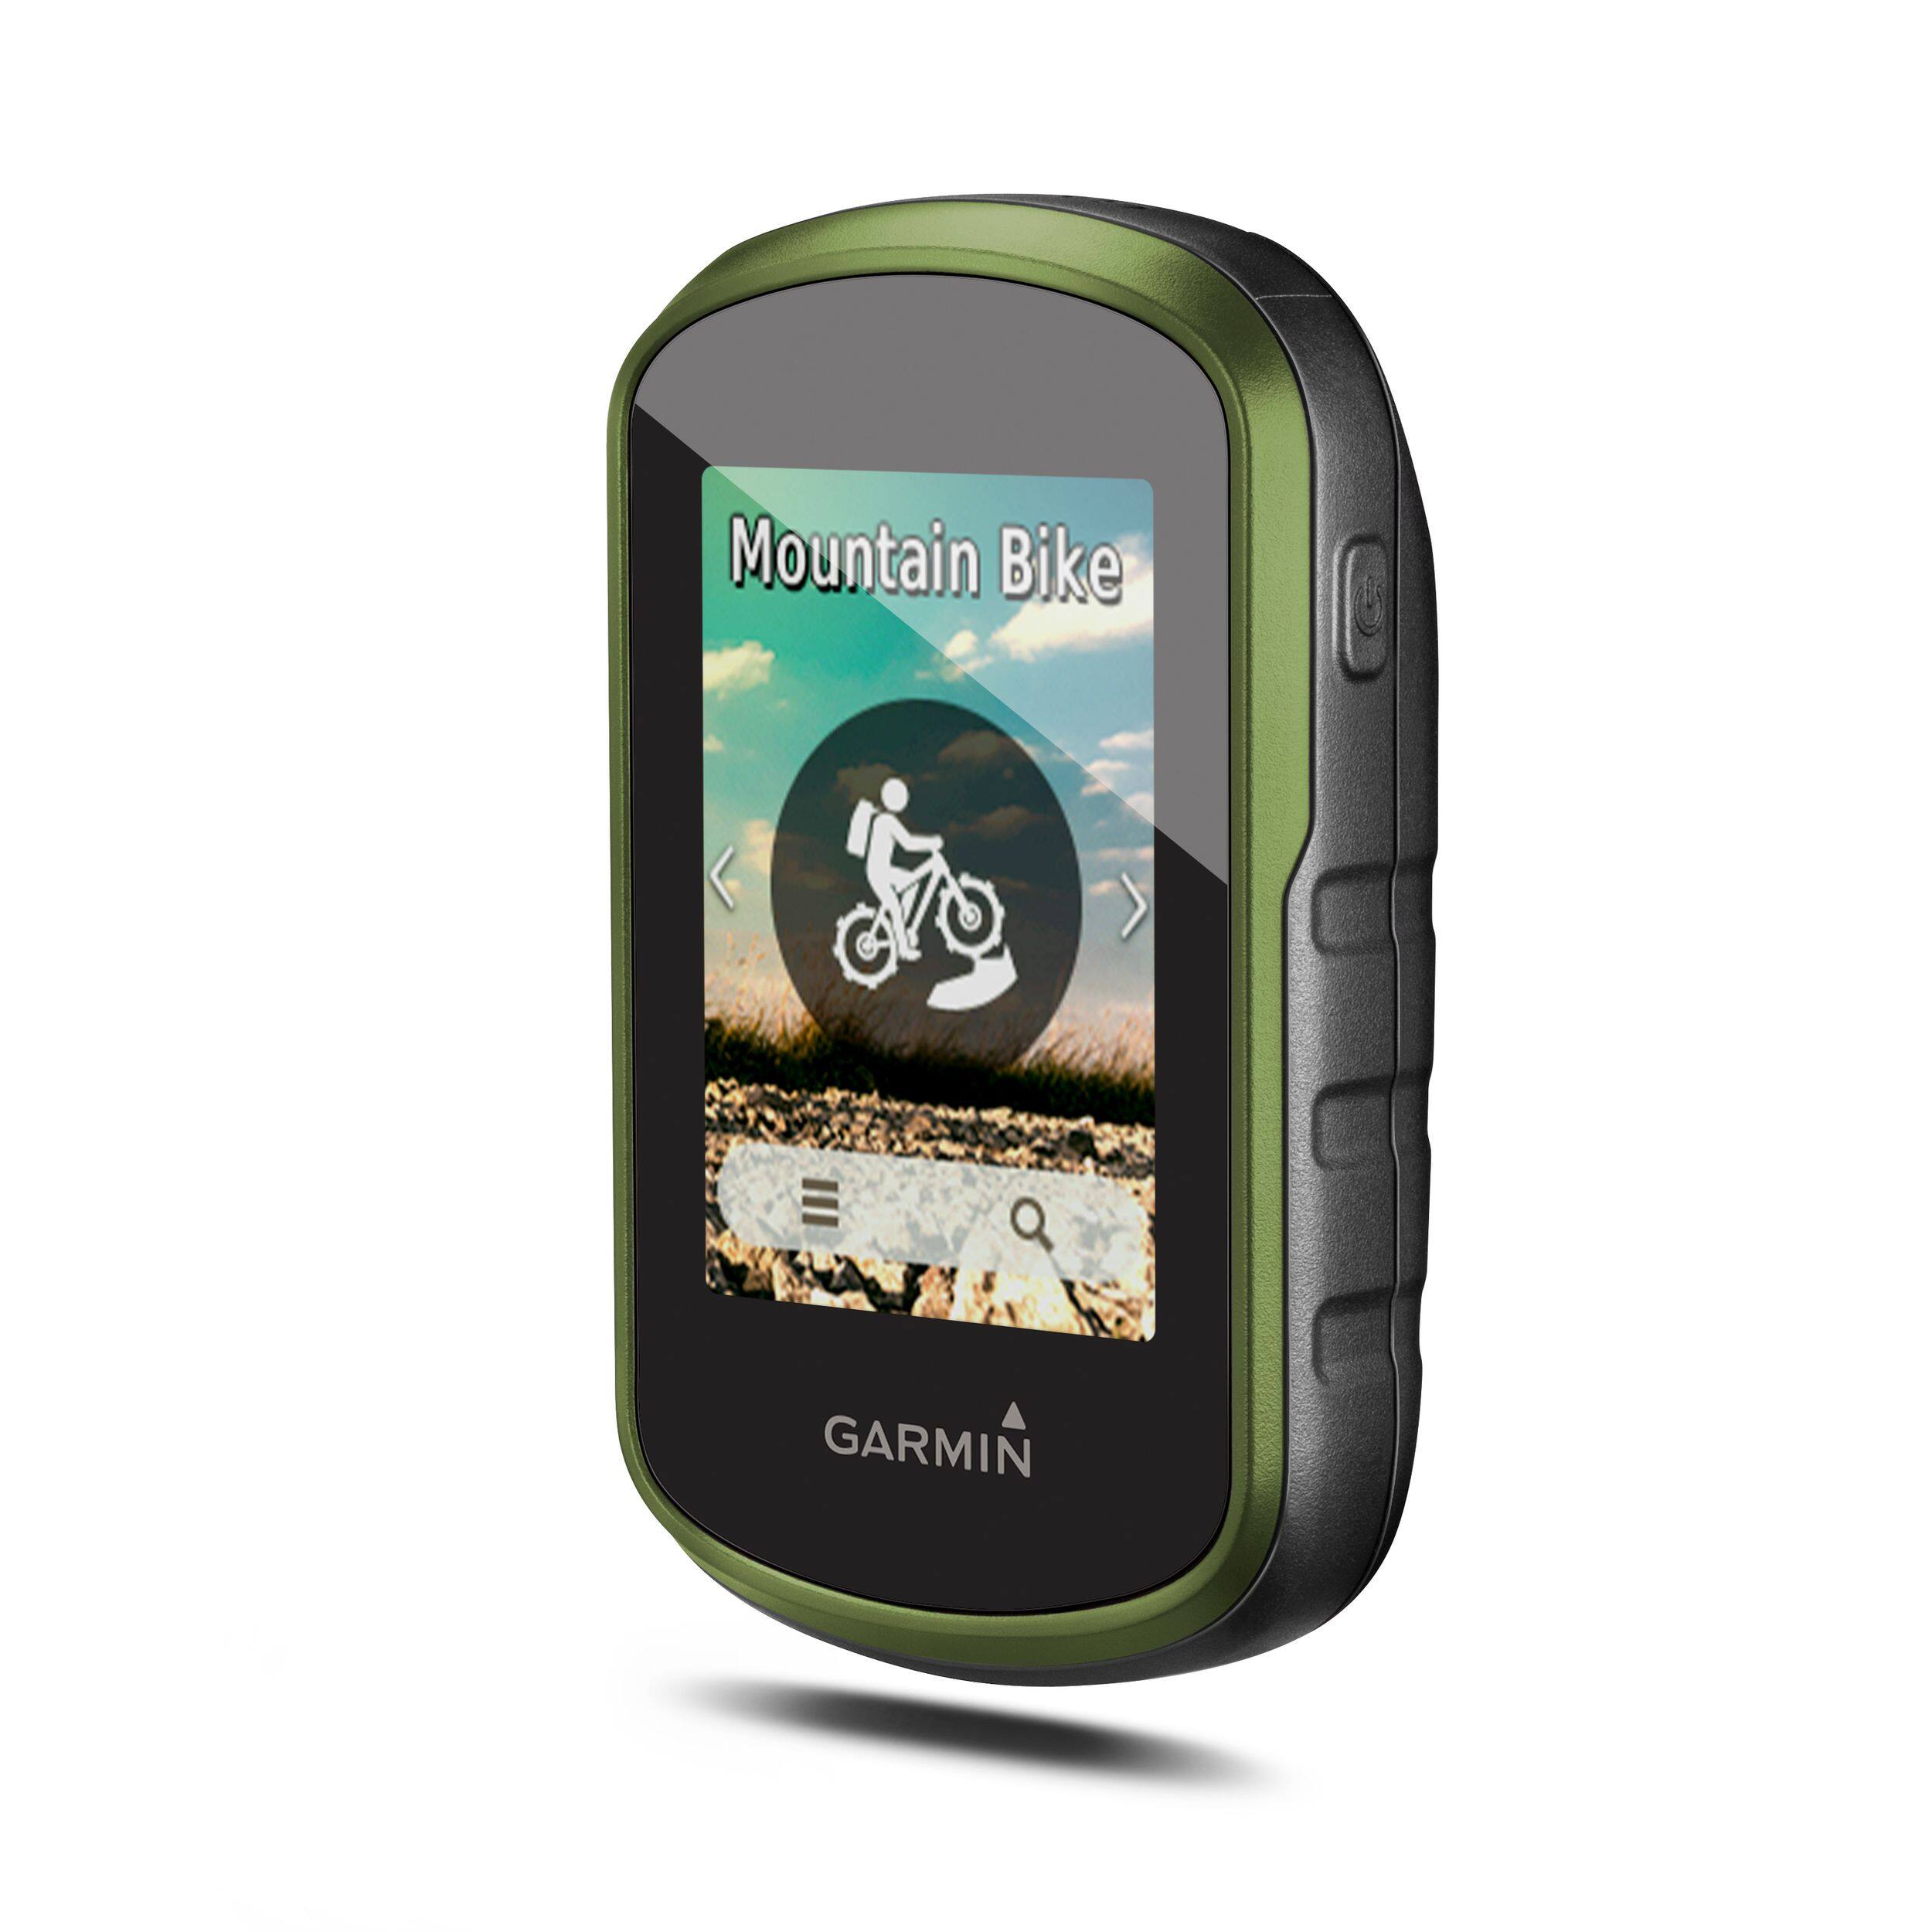 Garmin eTrex Touch 35 GPS